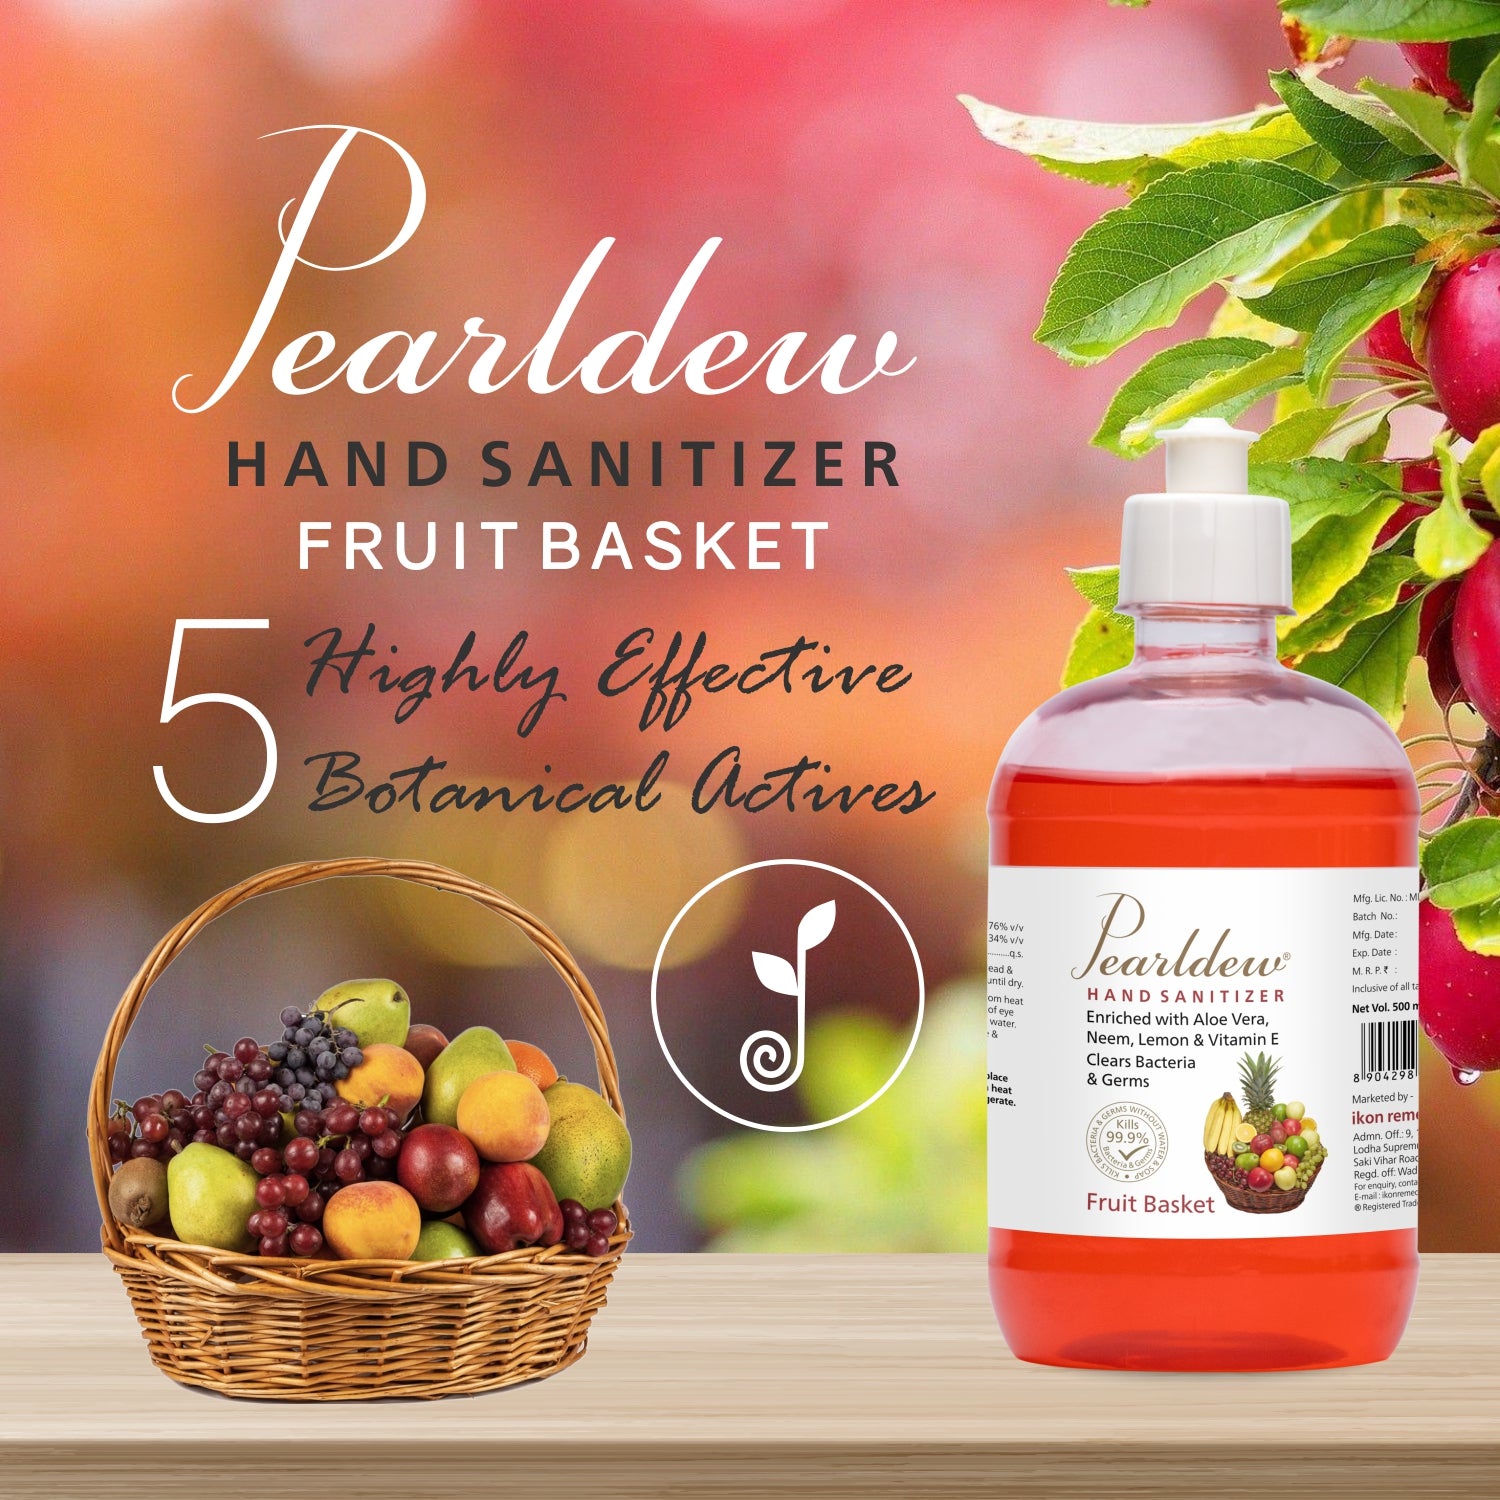 Pearldew Hand Sanitizer Gel (Fruit Basket) 500 ml